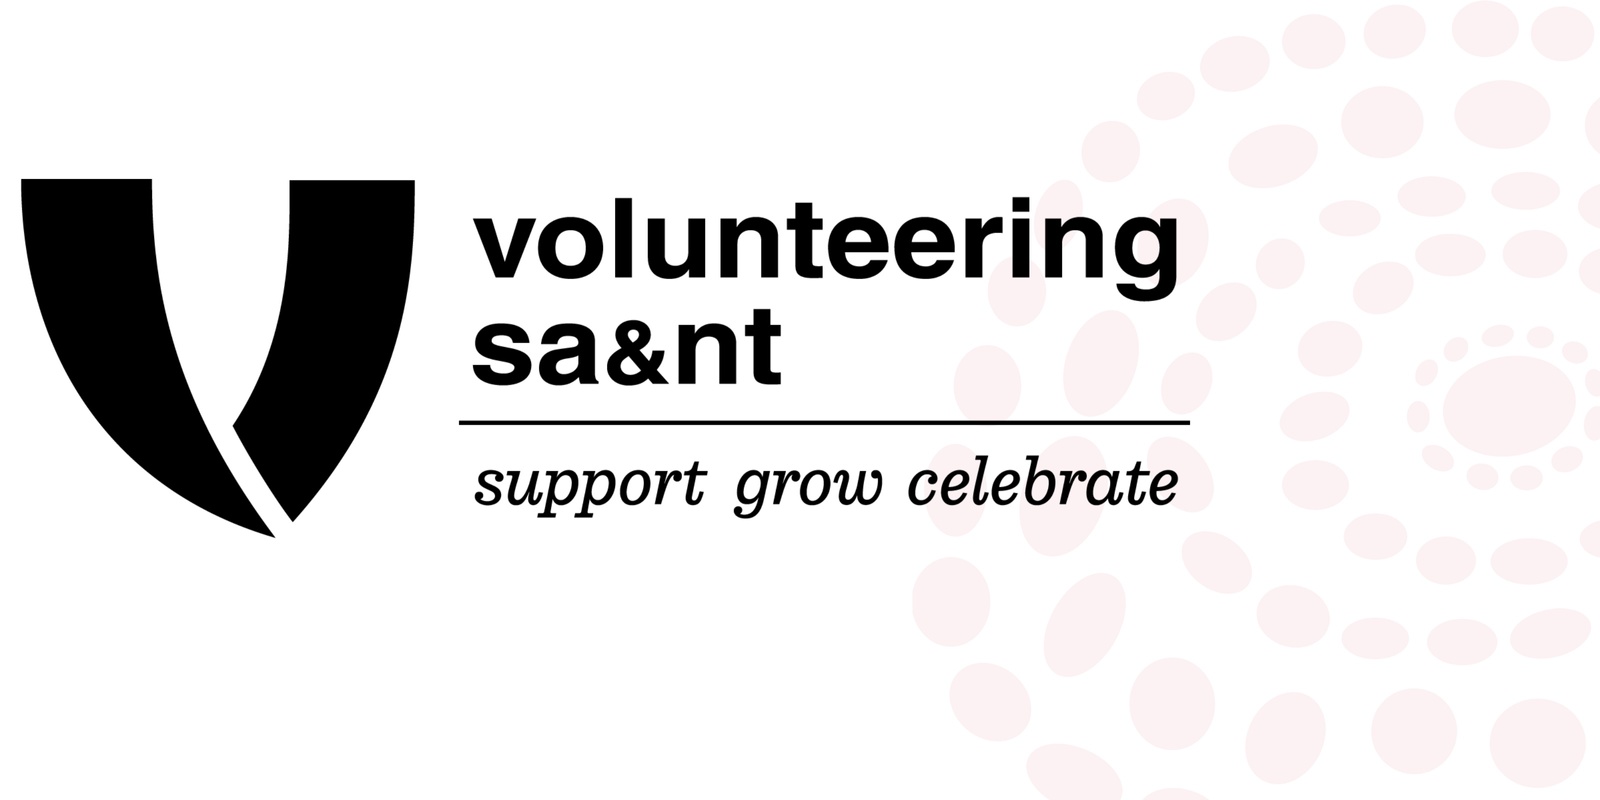 Volunteering SA&NT's banner